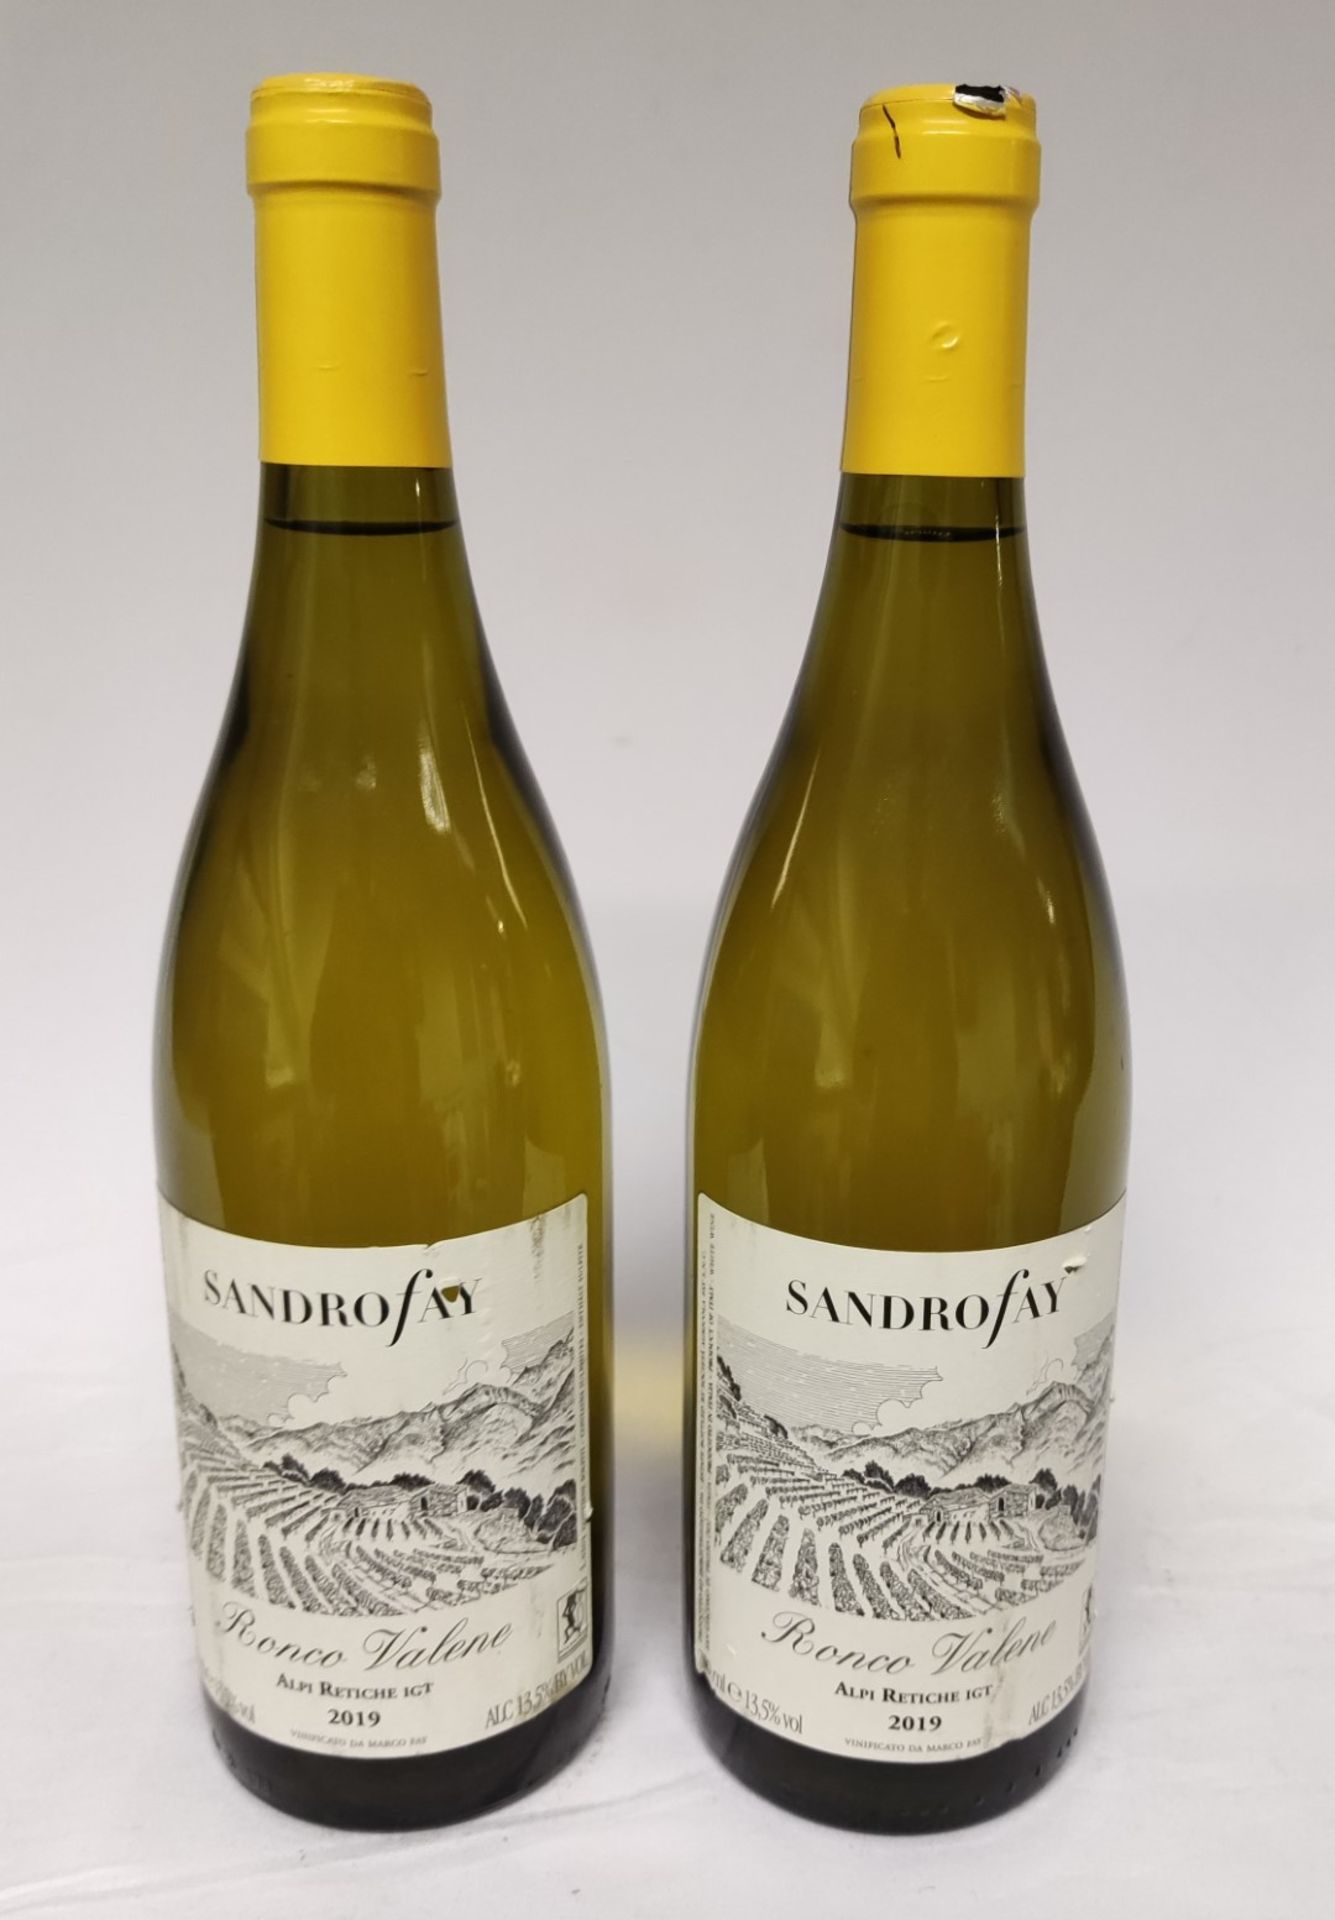 2 x Bottles of 2019 Sandro Fay Alpi Retiche Igt 2019 - Ronco Valene - 750Ml Bottles